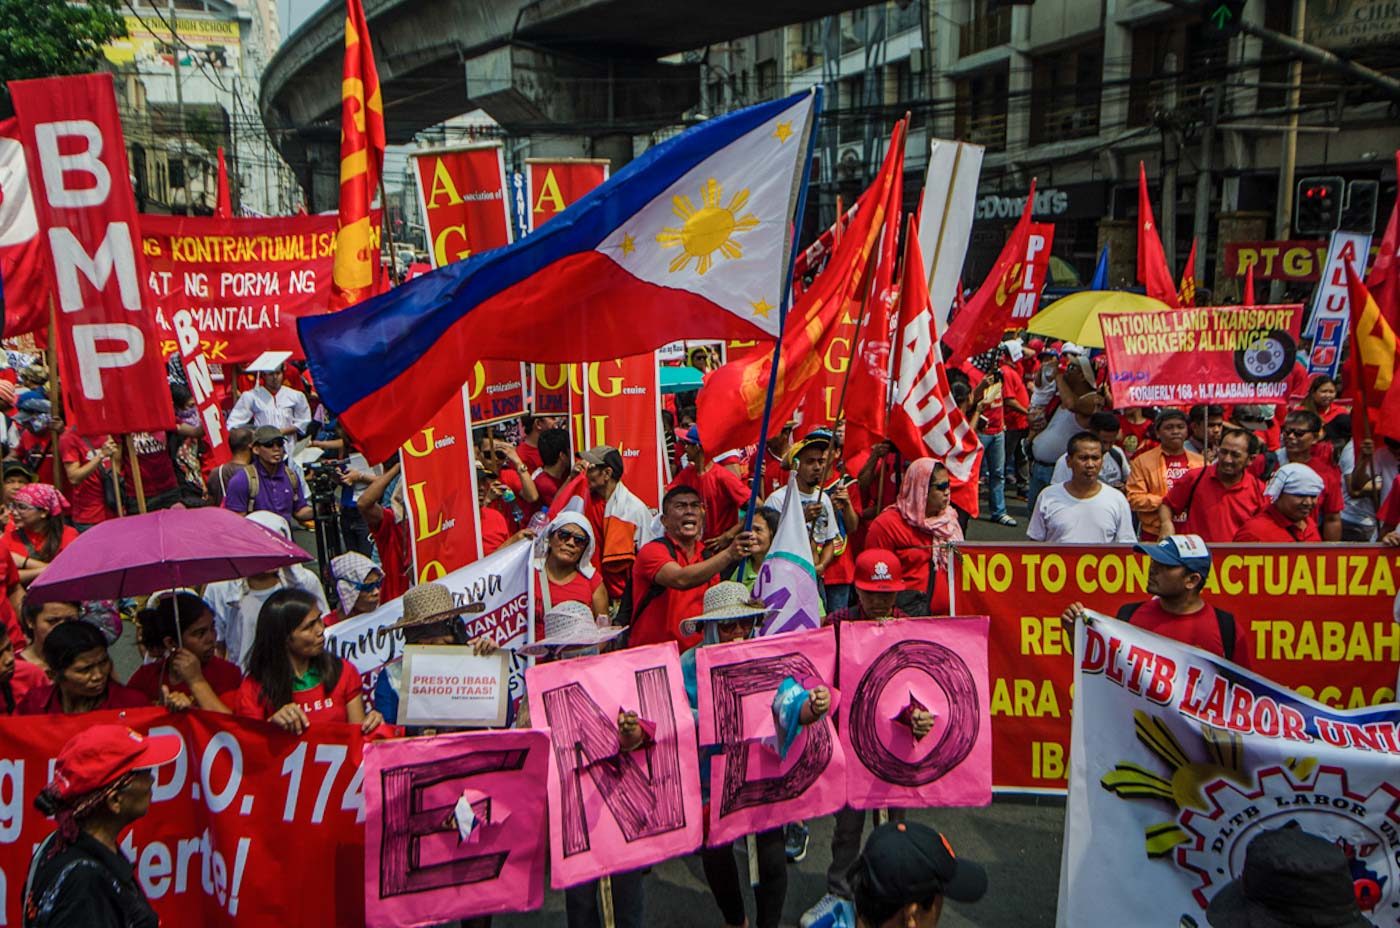 Ending contractualization needs 2 urgent actions from Duterte